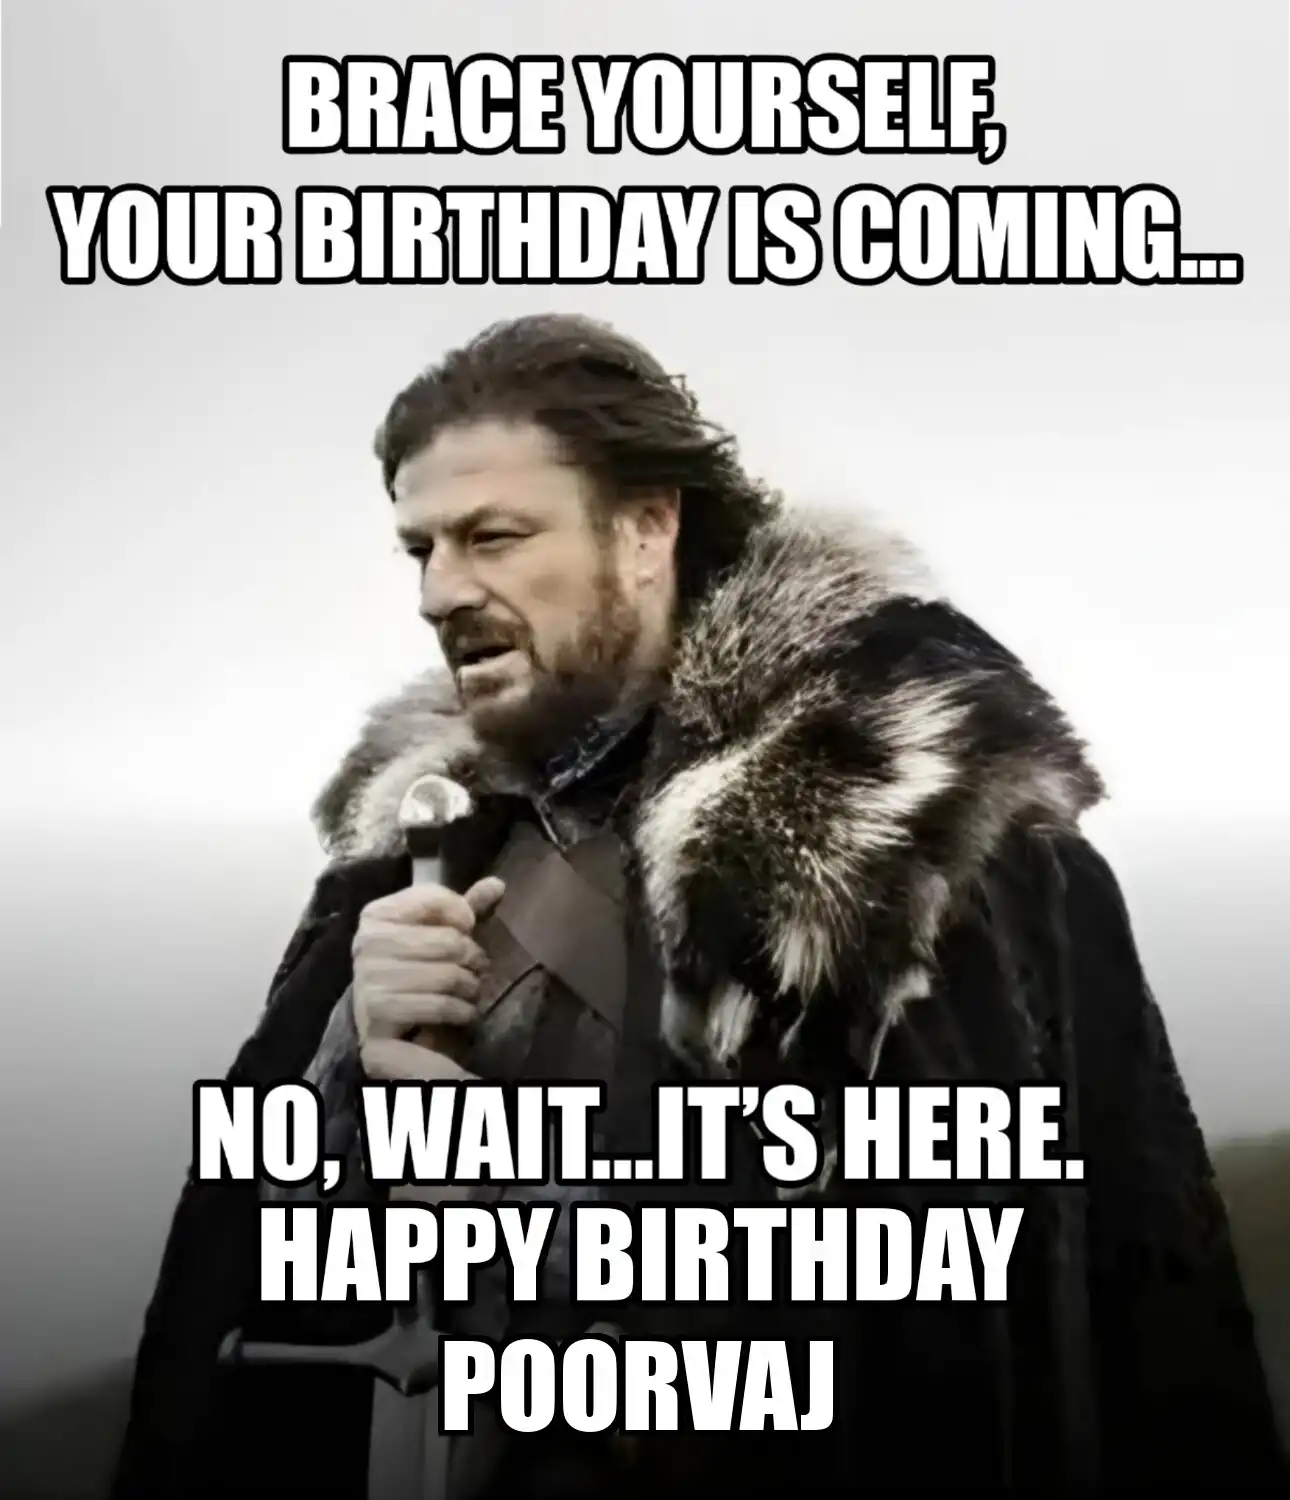 Happy Birthday Poorvaj Brace Yourself Your Birthday Is Coming Meme